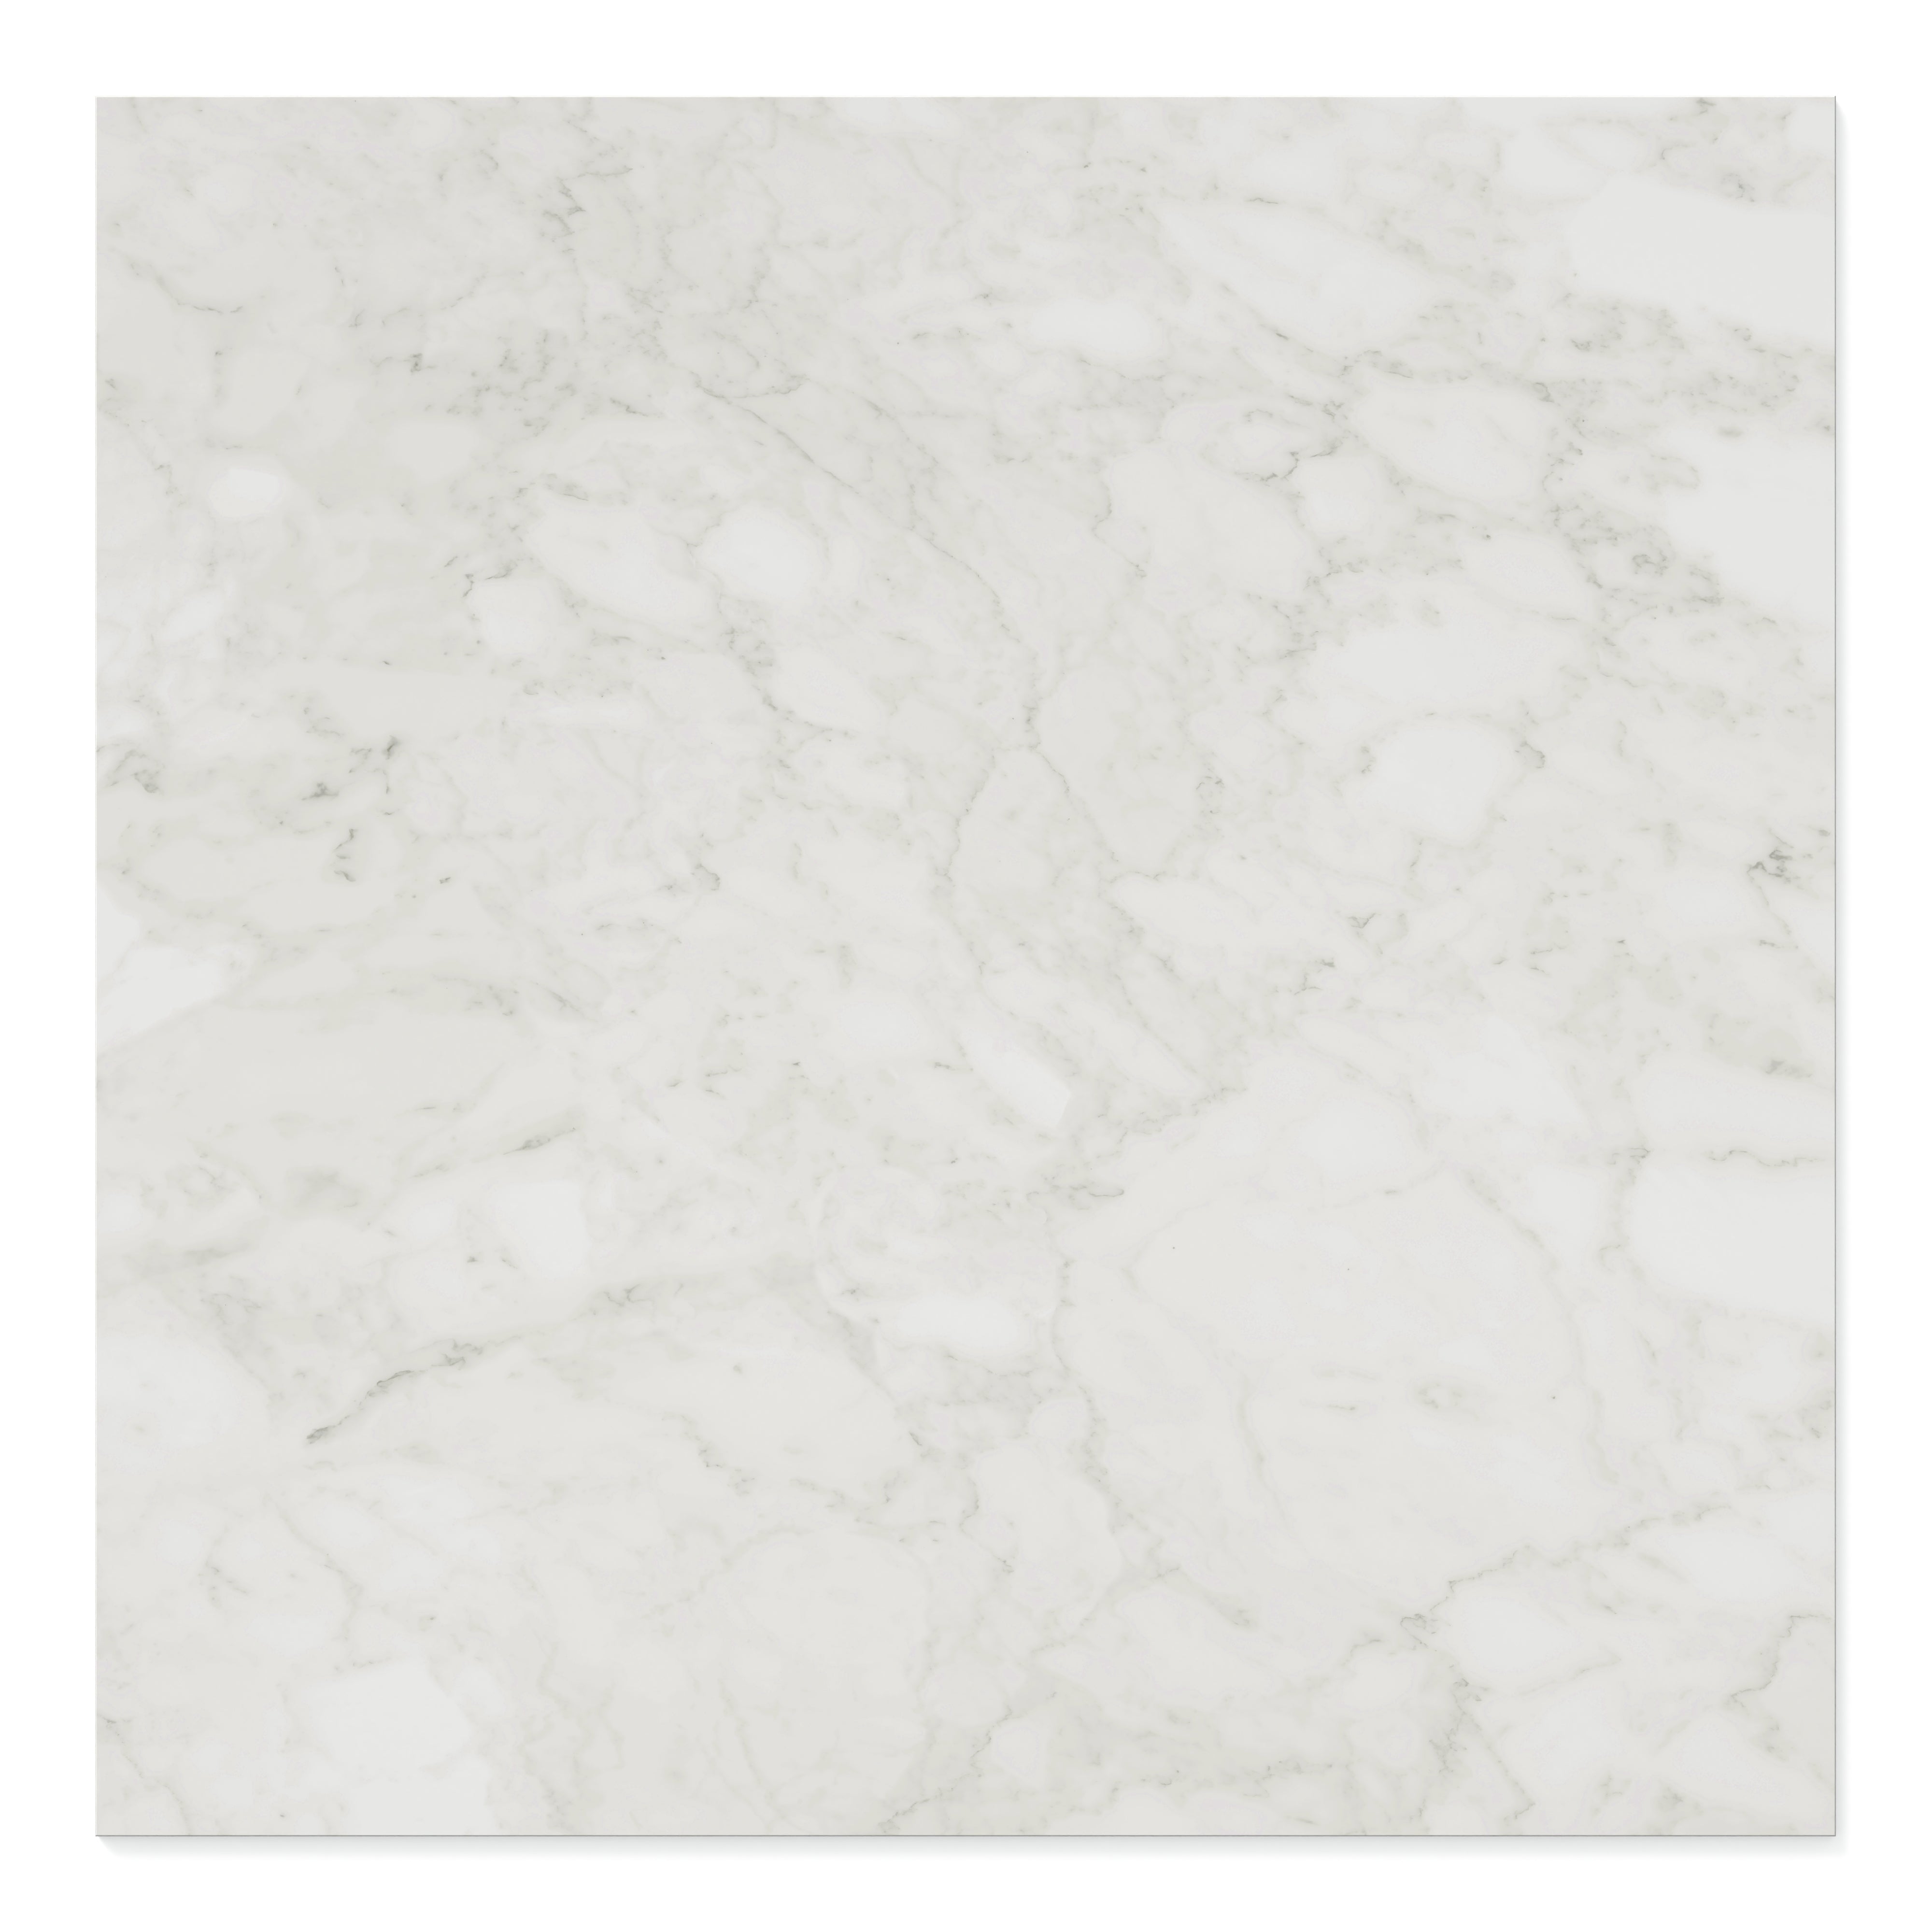 Aniston 48x48 Matte Porcelain Tile in Carrara Bianco